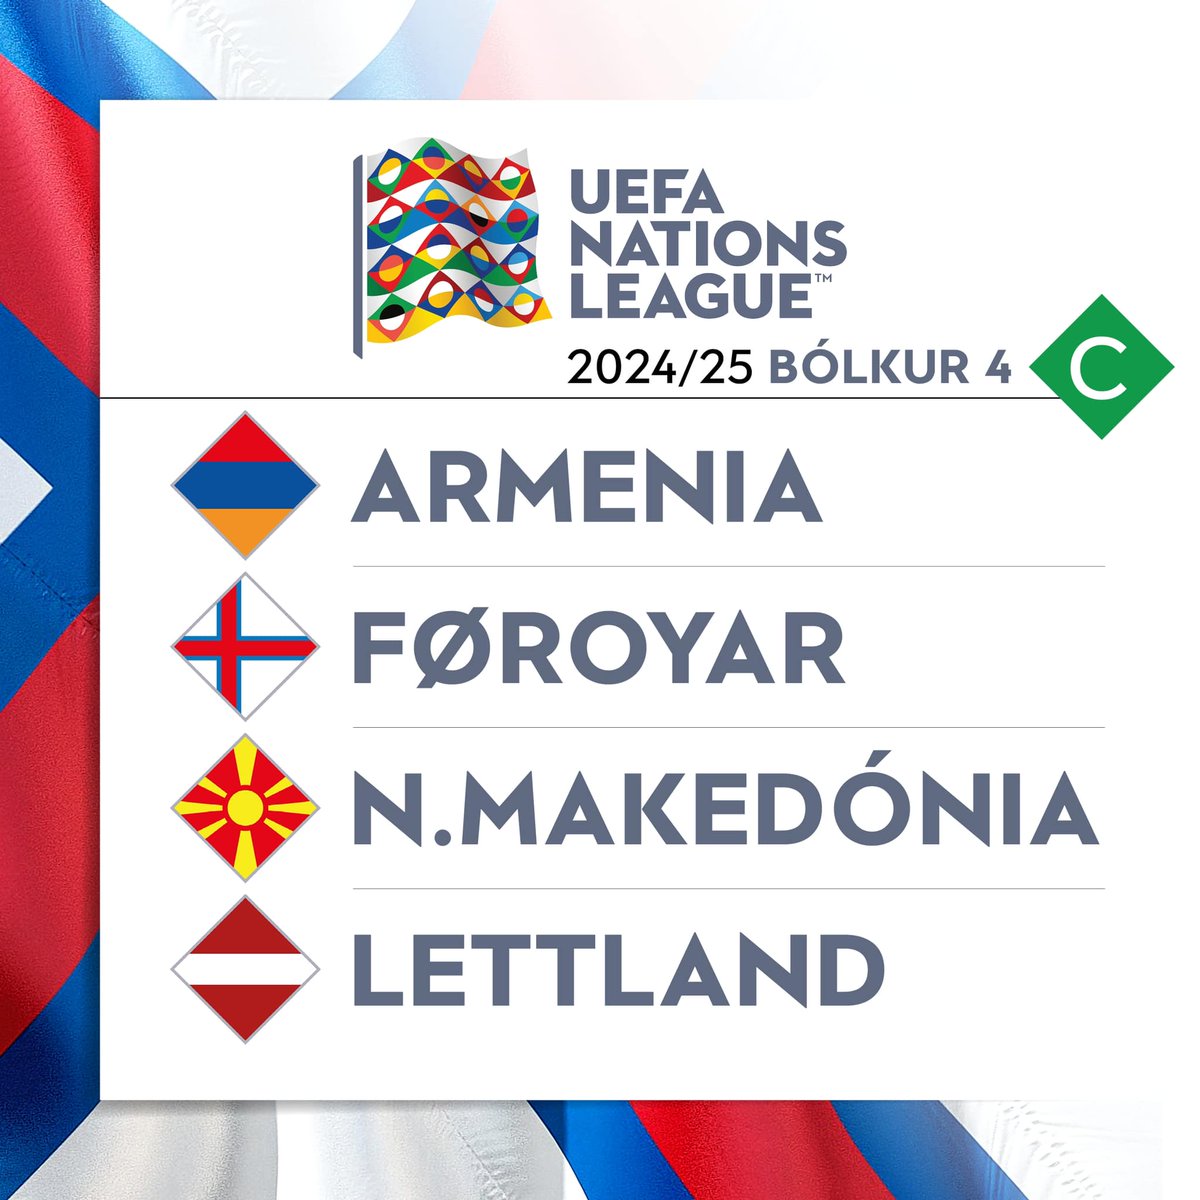 #UEFA #NationsLeague draw ⚽️ Faroe Islands are in League C, Group 4, where we'll be facing: Armenia 🇦🇲 North Macedonia 🇲🇰 Latvia 🇱🇻